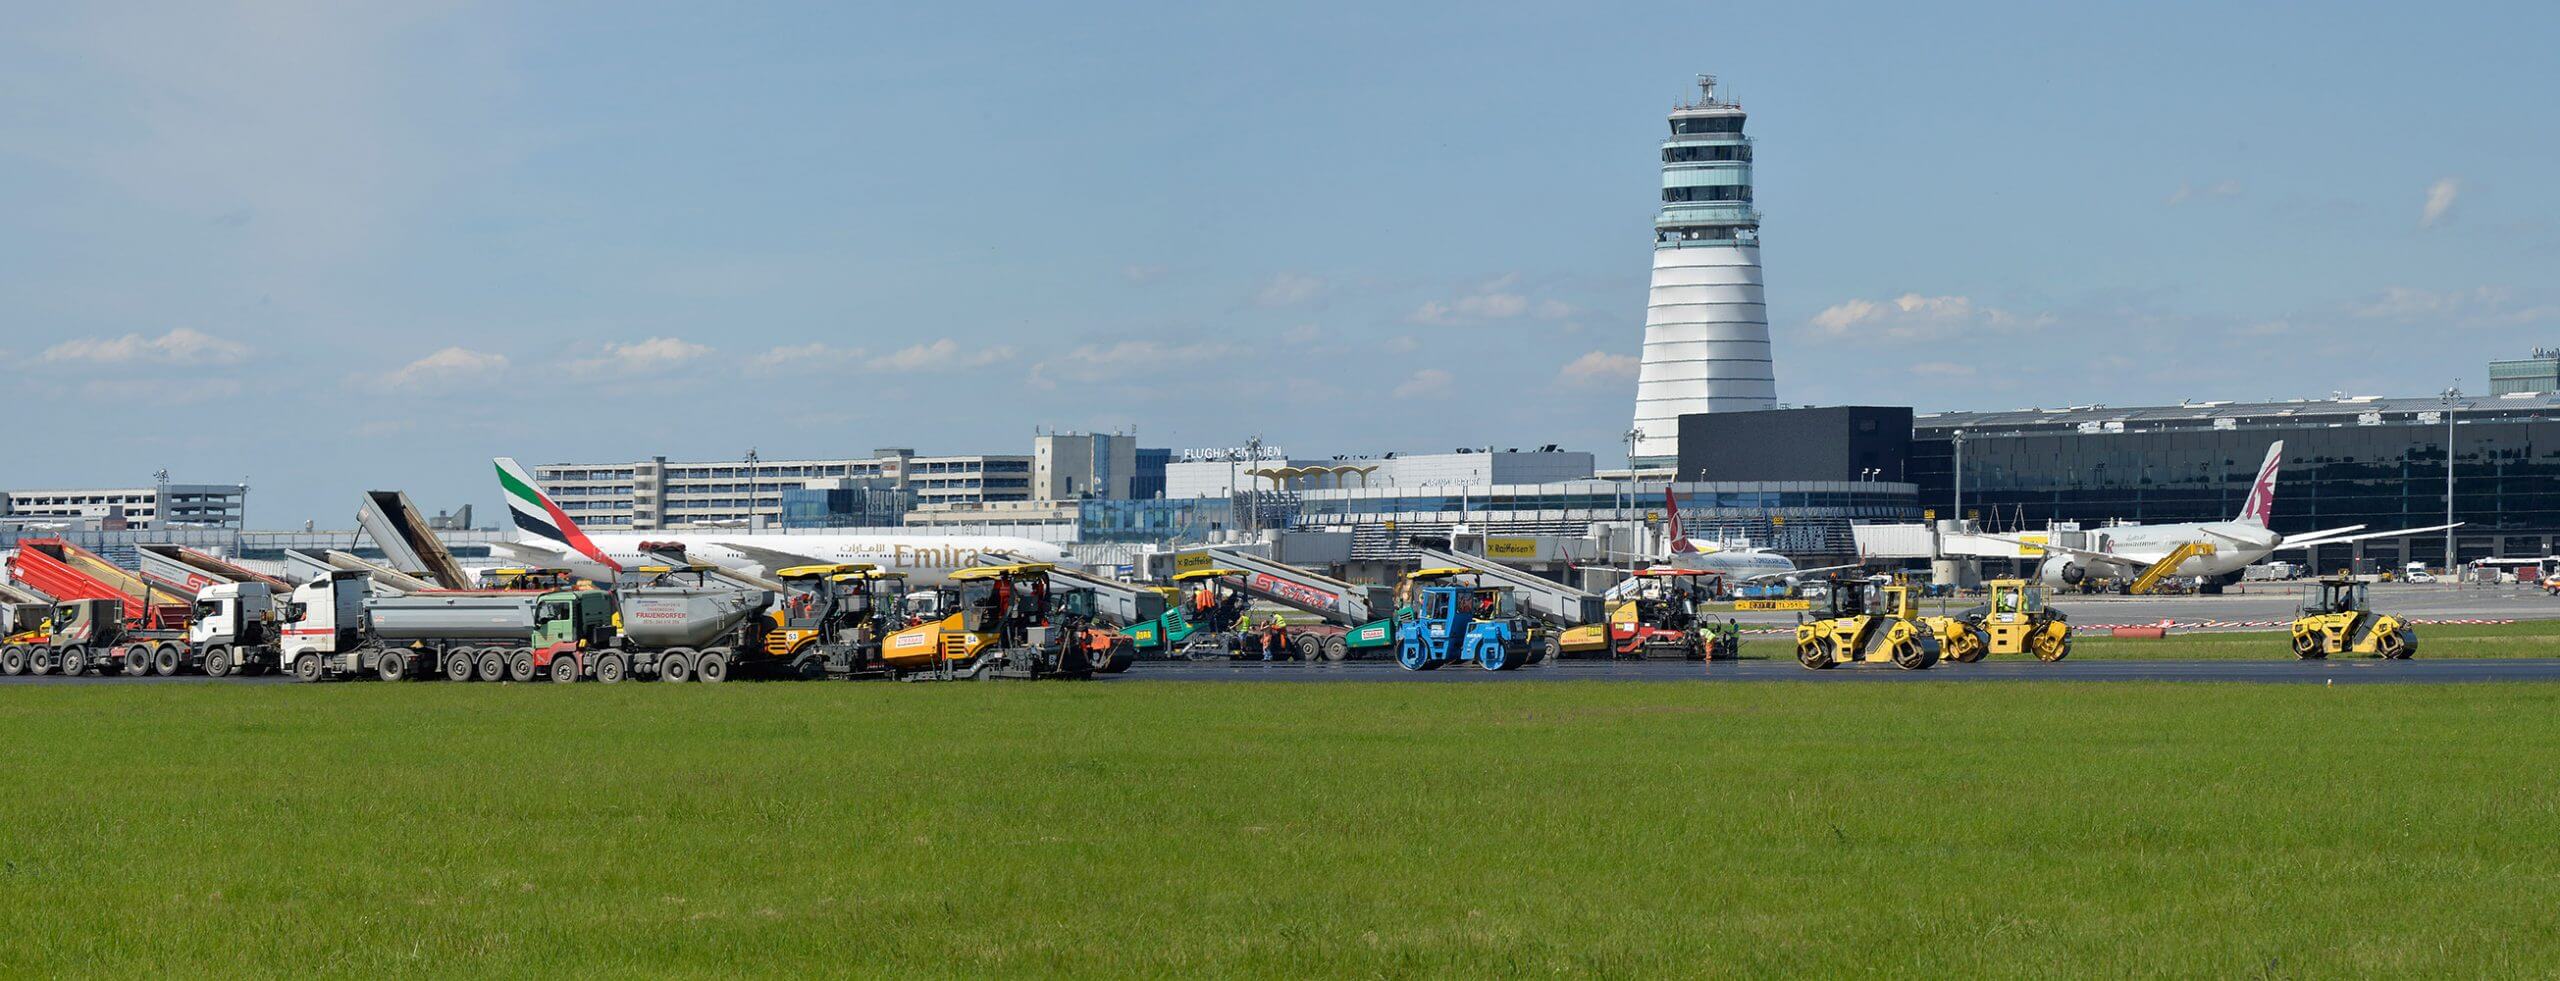 Airport runway renovation on runway 11/29